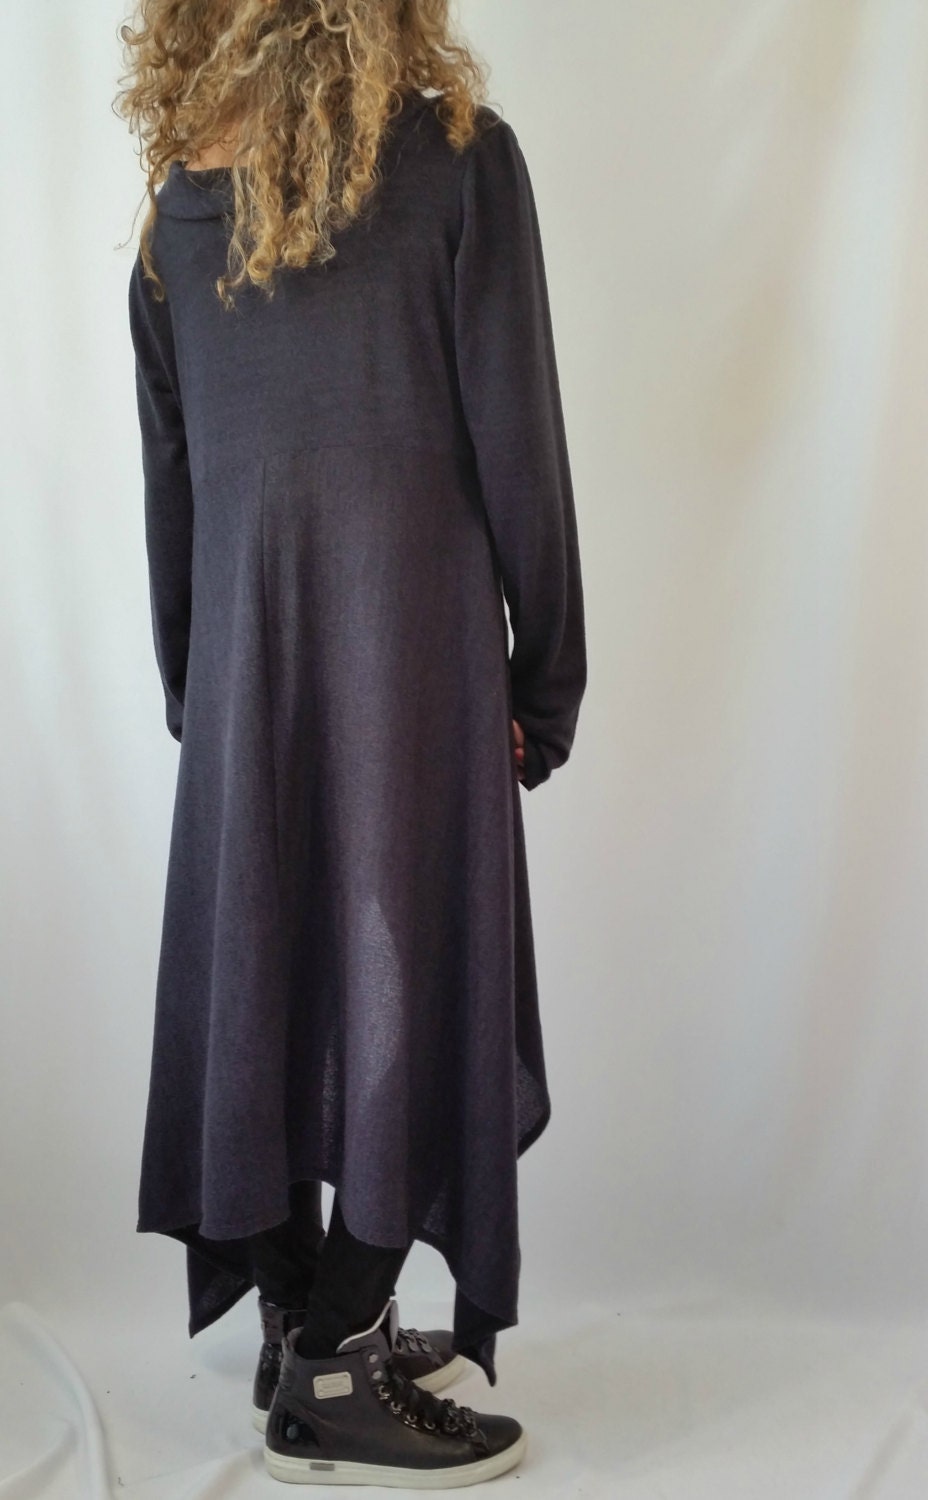 Long Sleeve Sweater Dress / Brown Asymmetrical Sweater Top / | Etsy